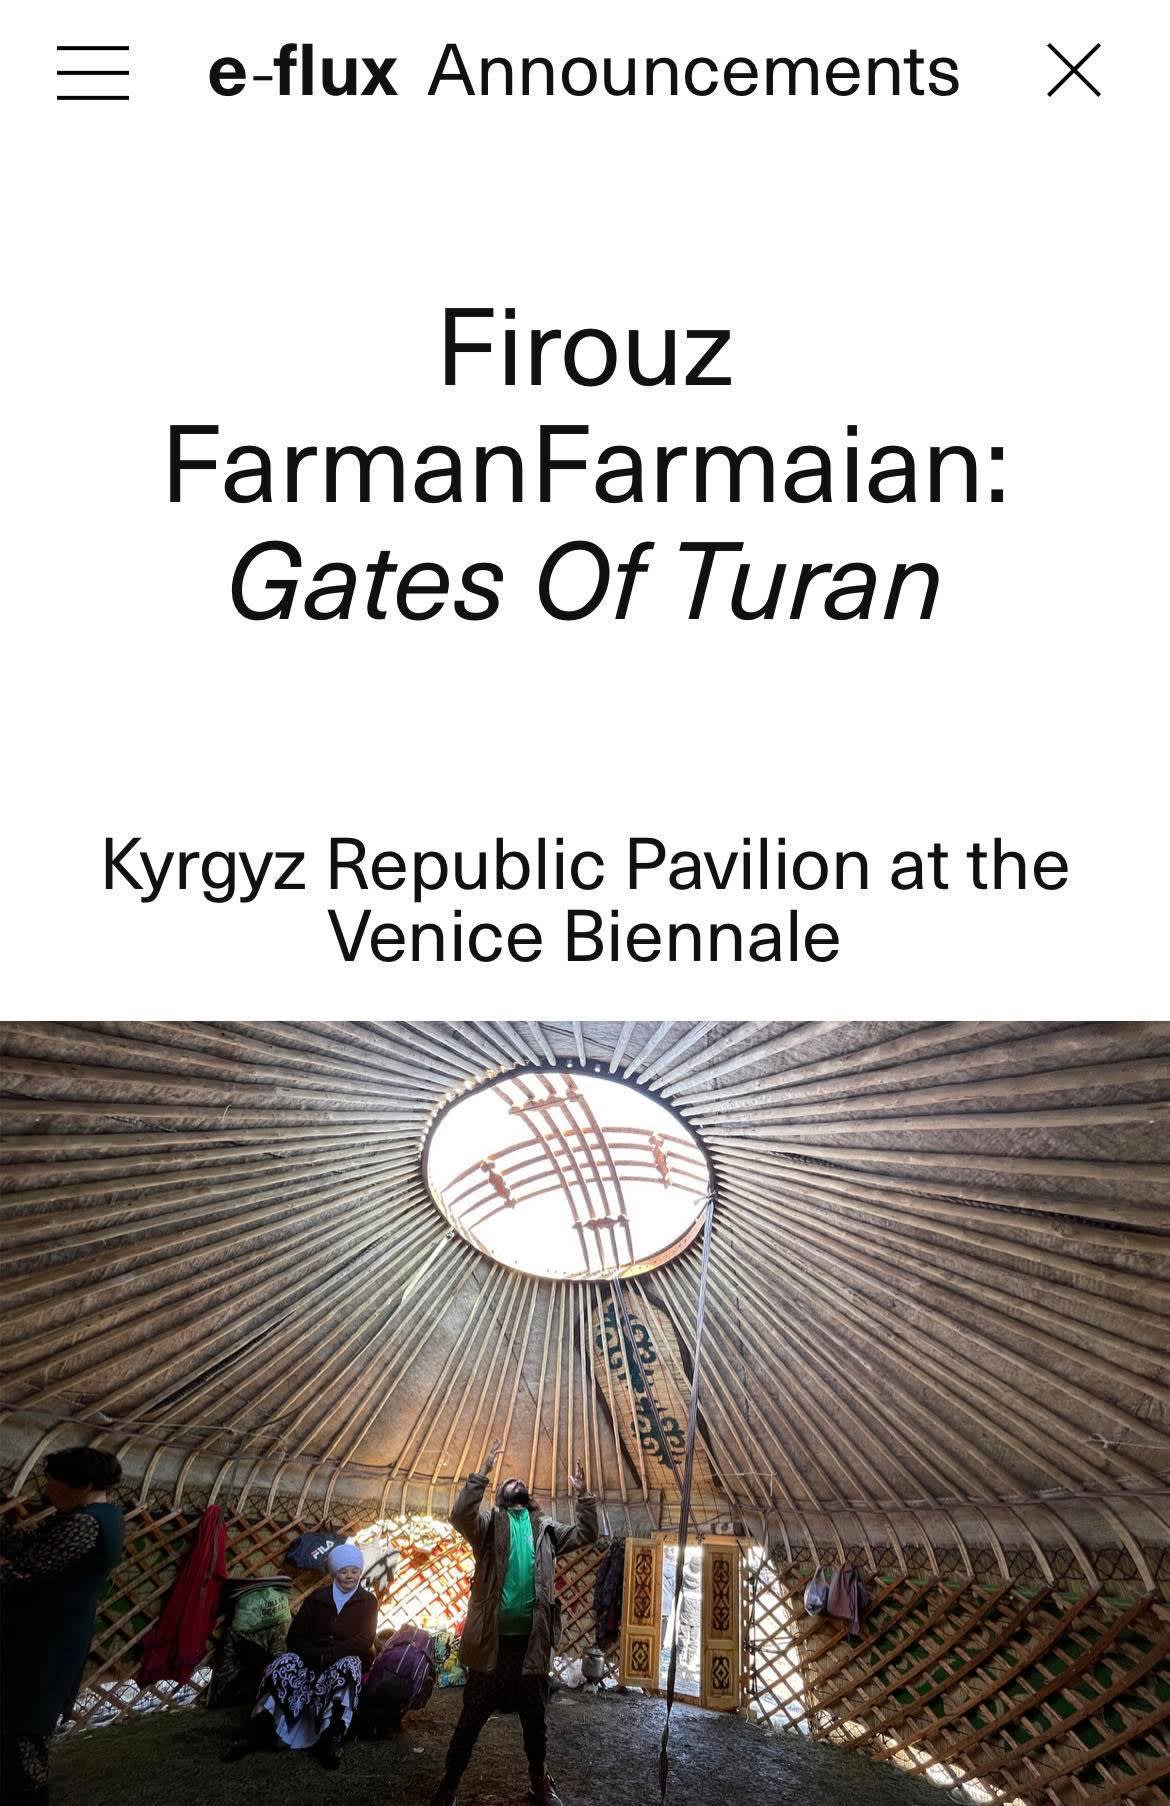 Firouz farmanfarmaian Under ther Tunduk, Kyrgyzstan